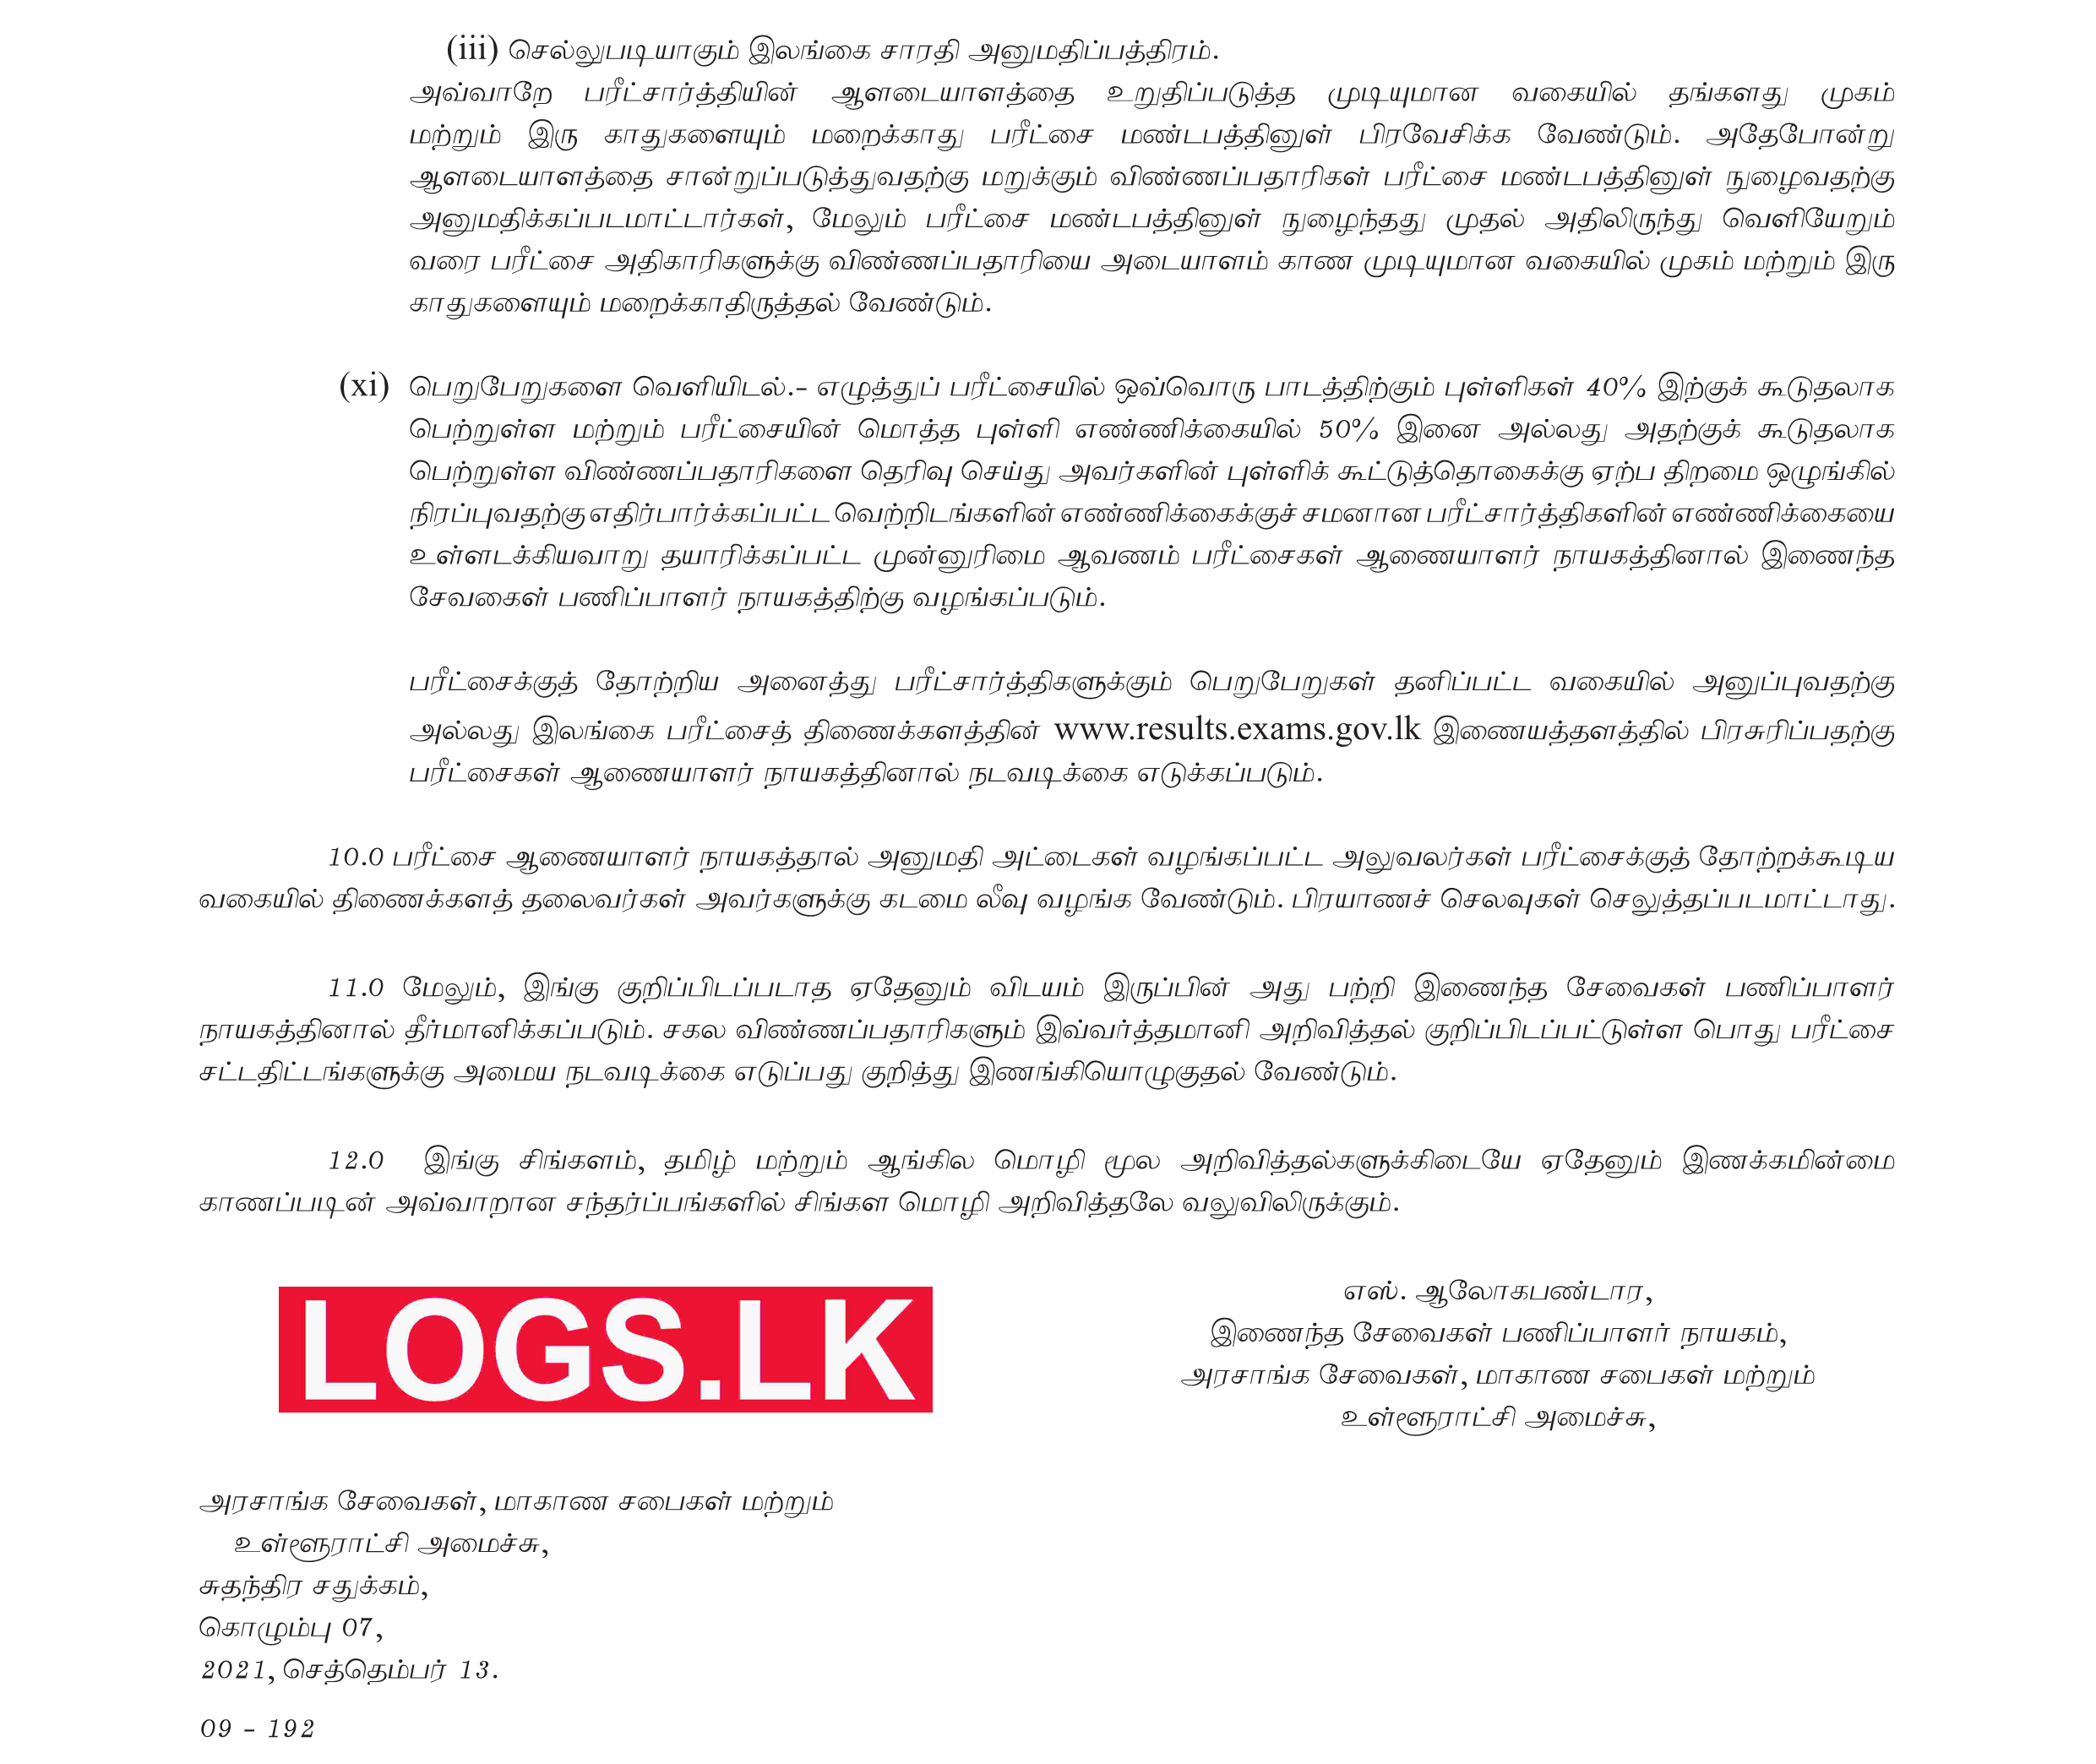 Sri Lanka Information and Communication Technology Service - 2021 Tamil